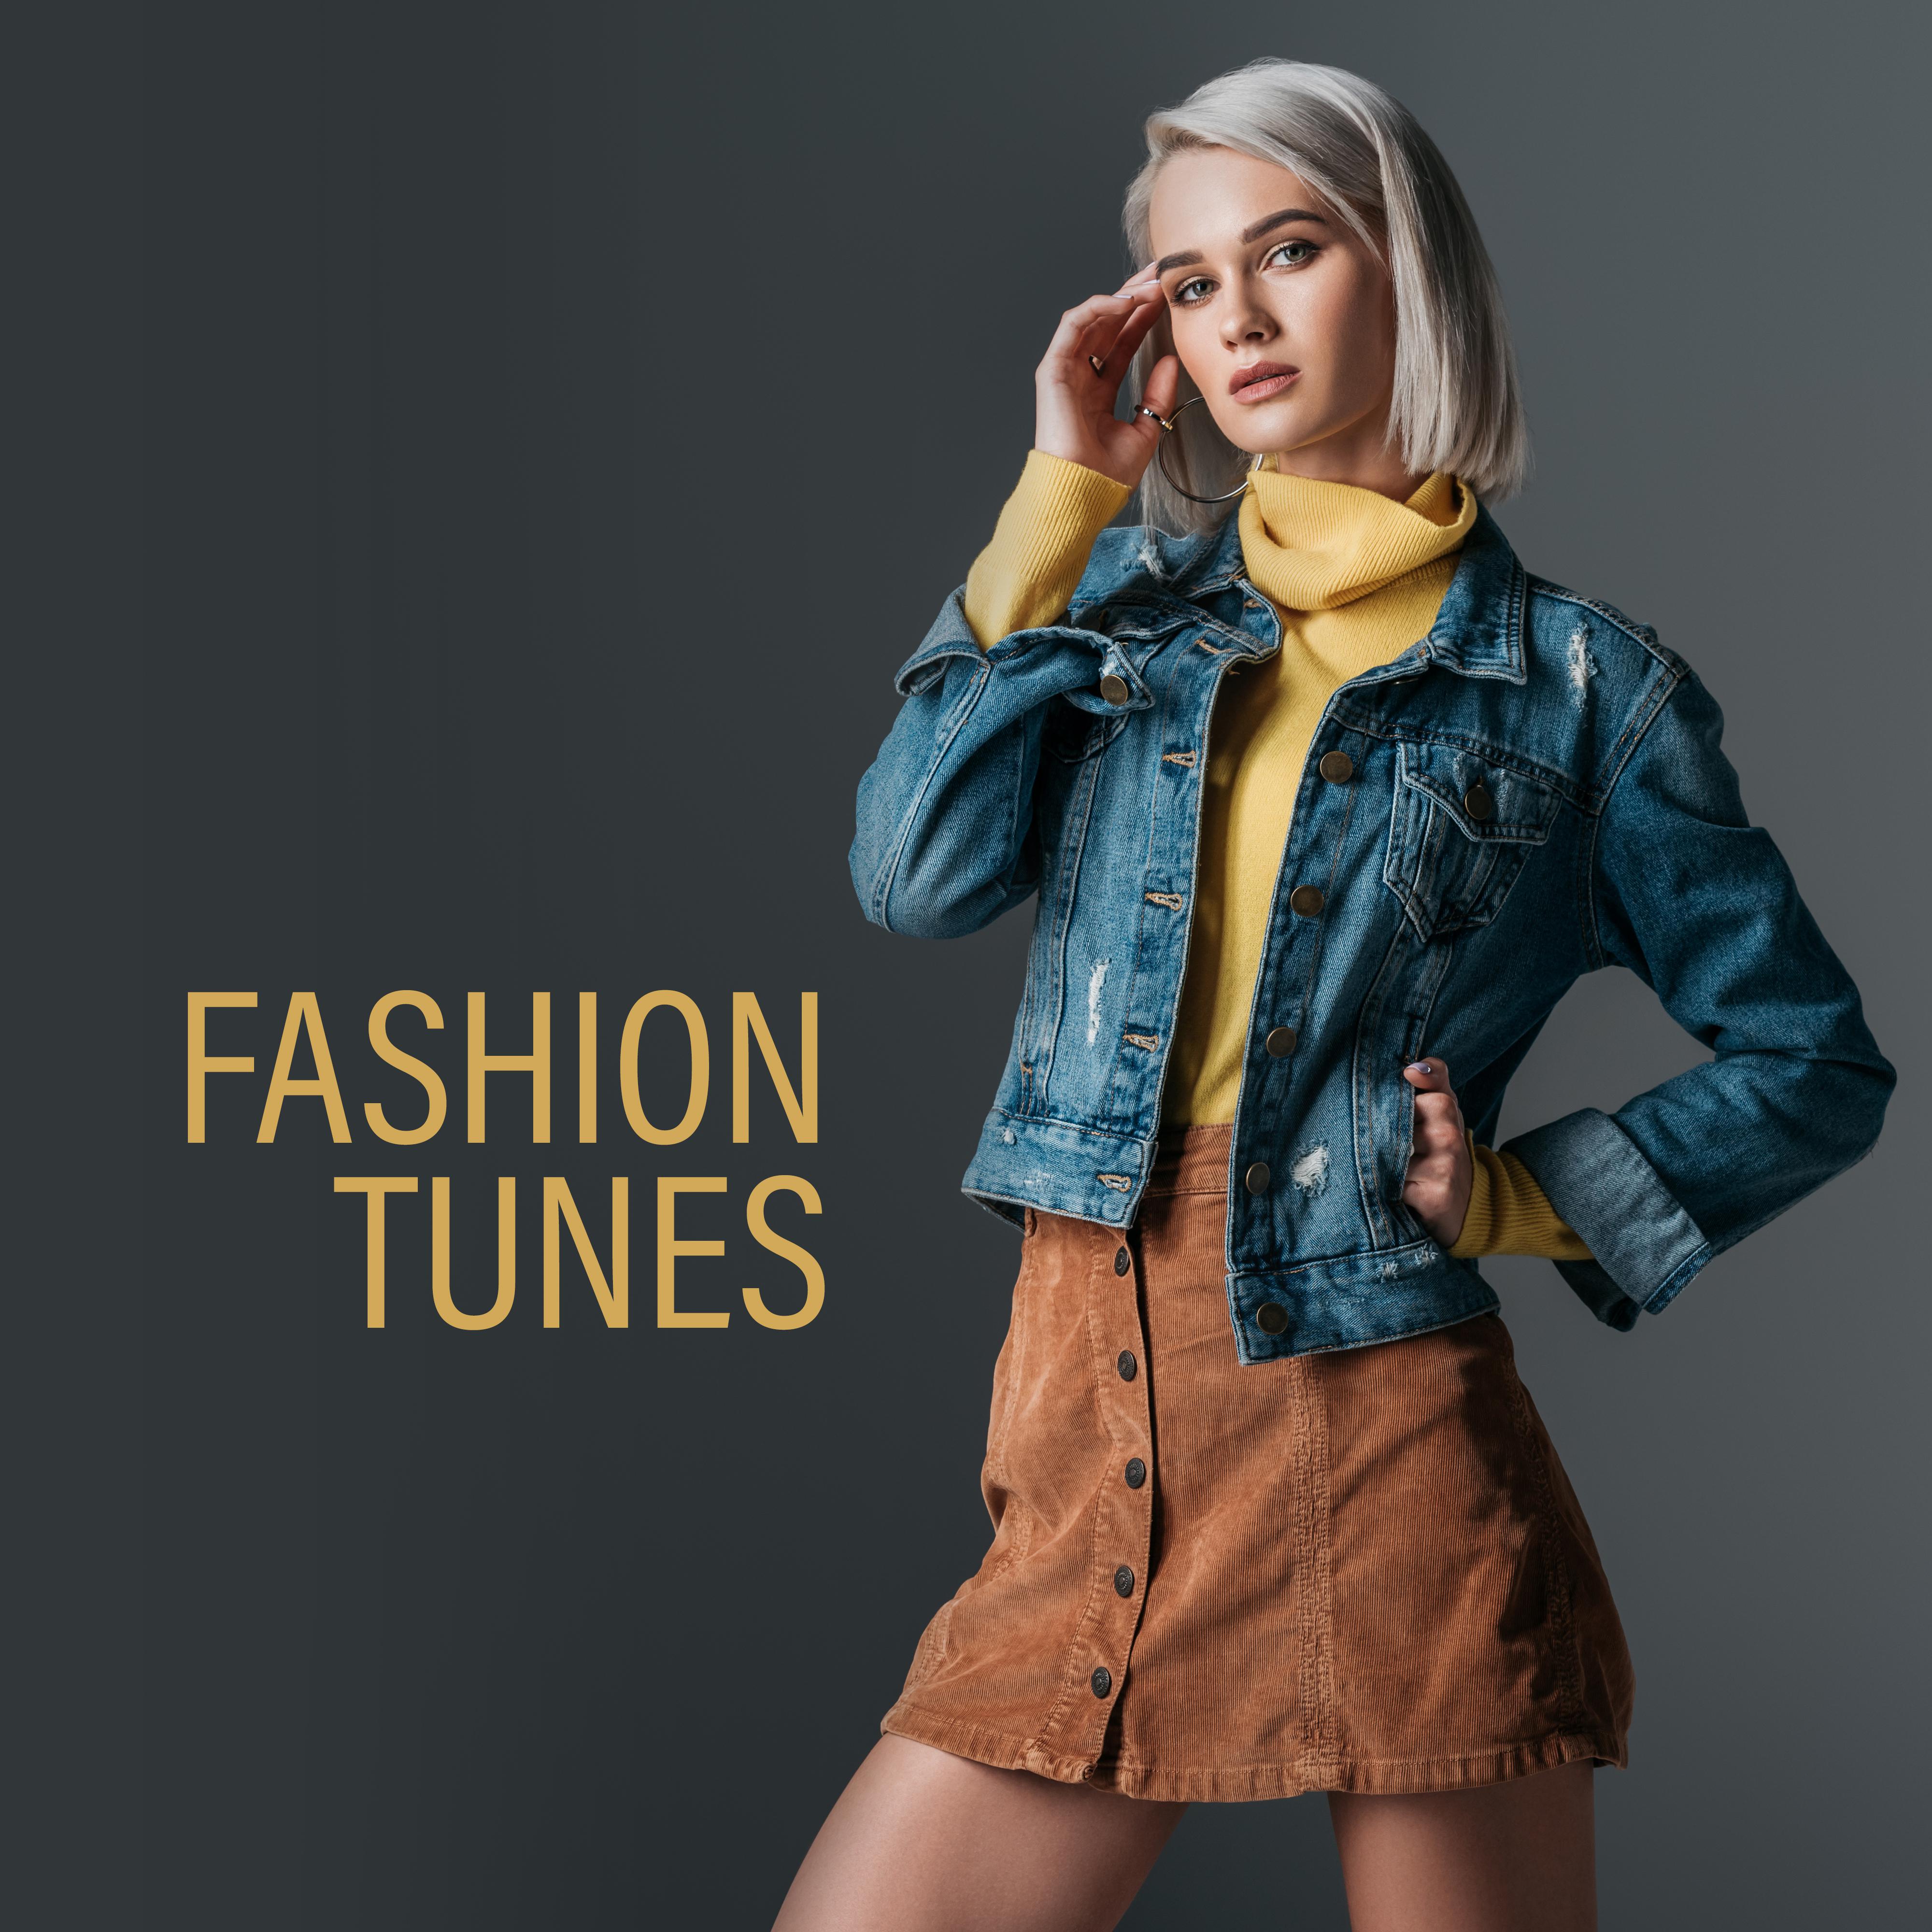 Fashion Tunes  Runway Music 2019, Chilled Mix, Fashion Beats, Chill Out 2019